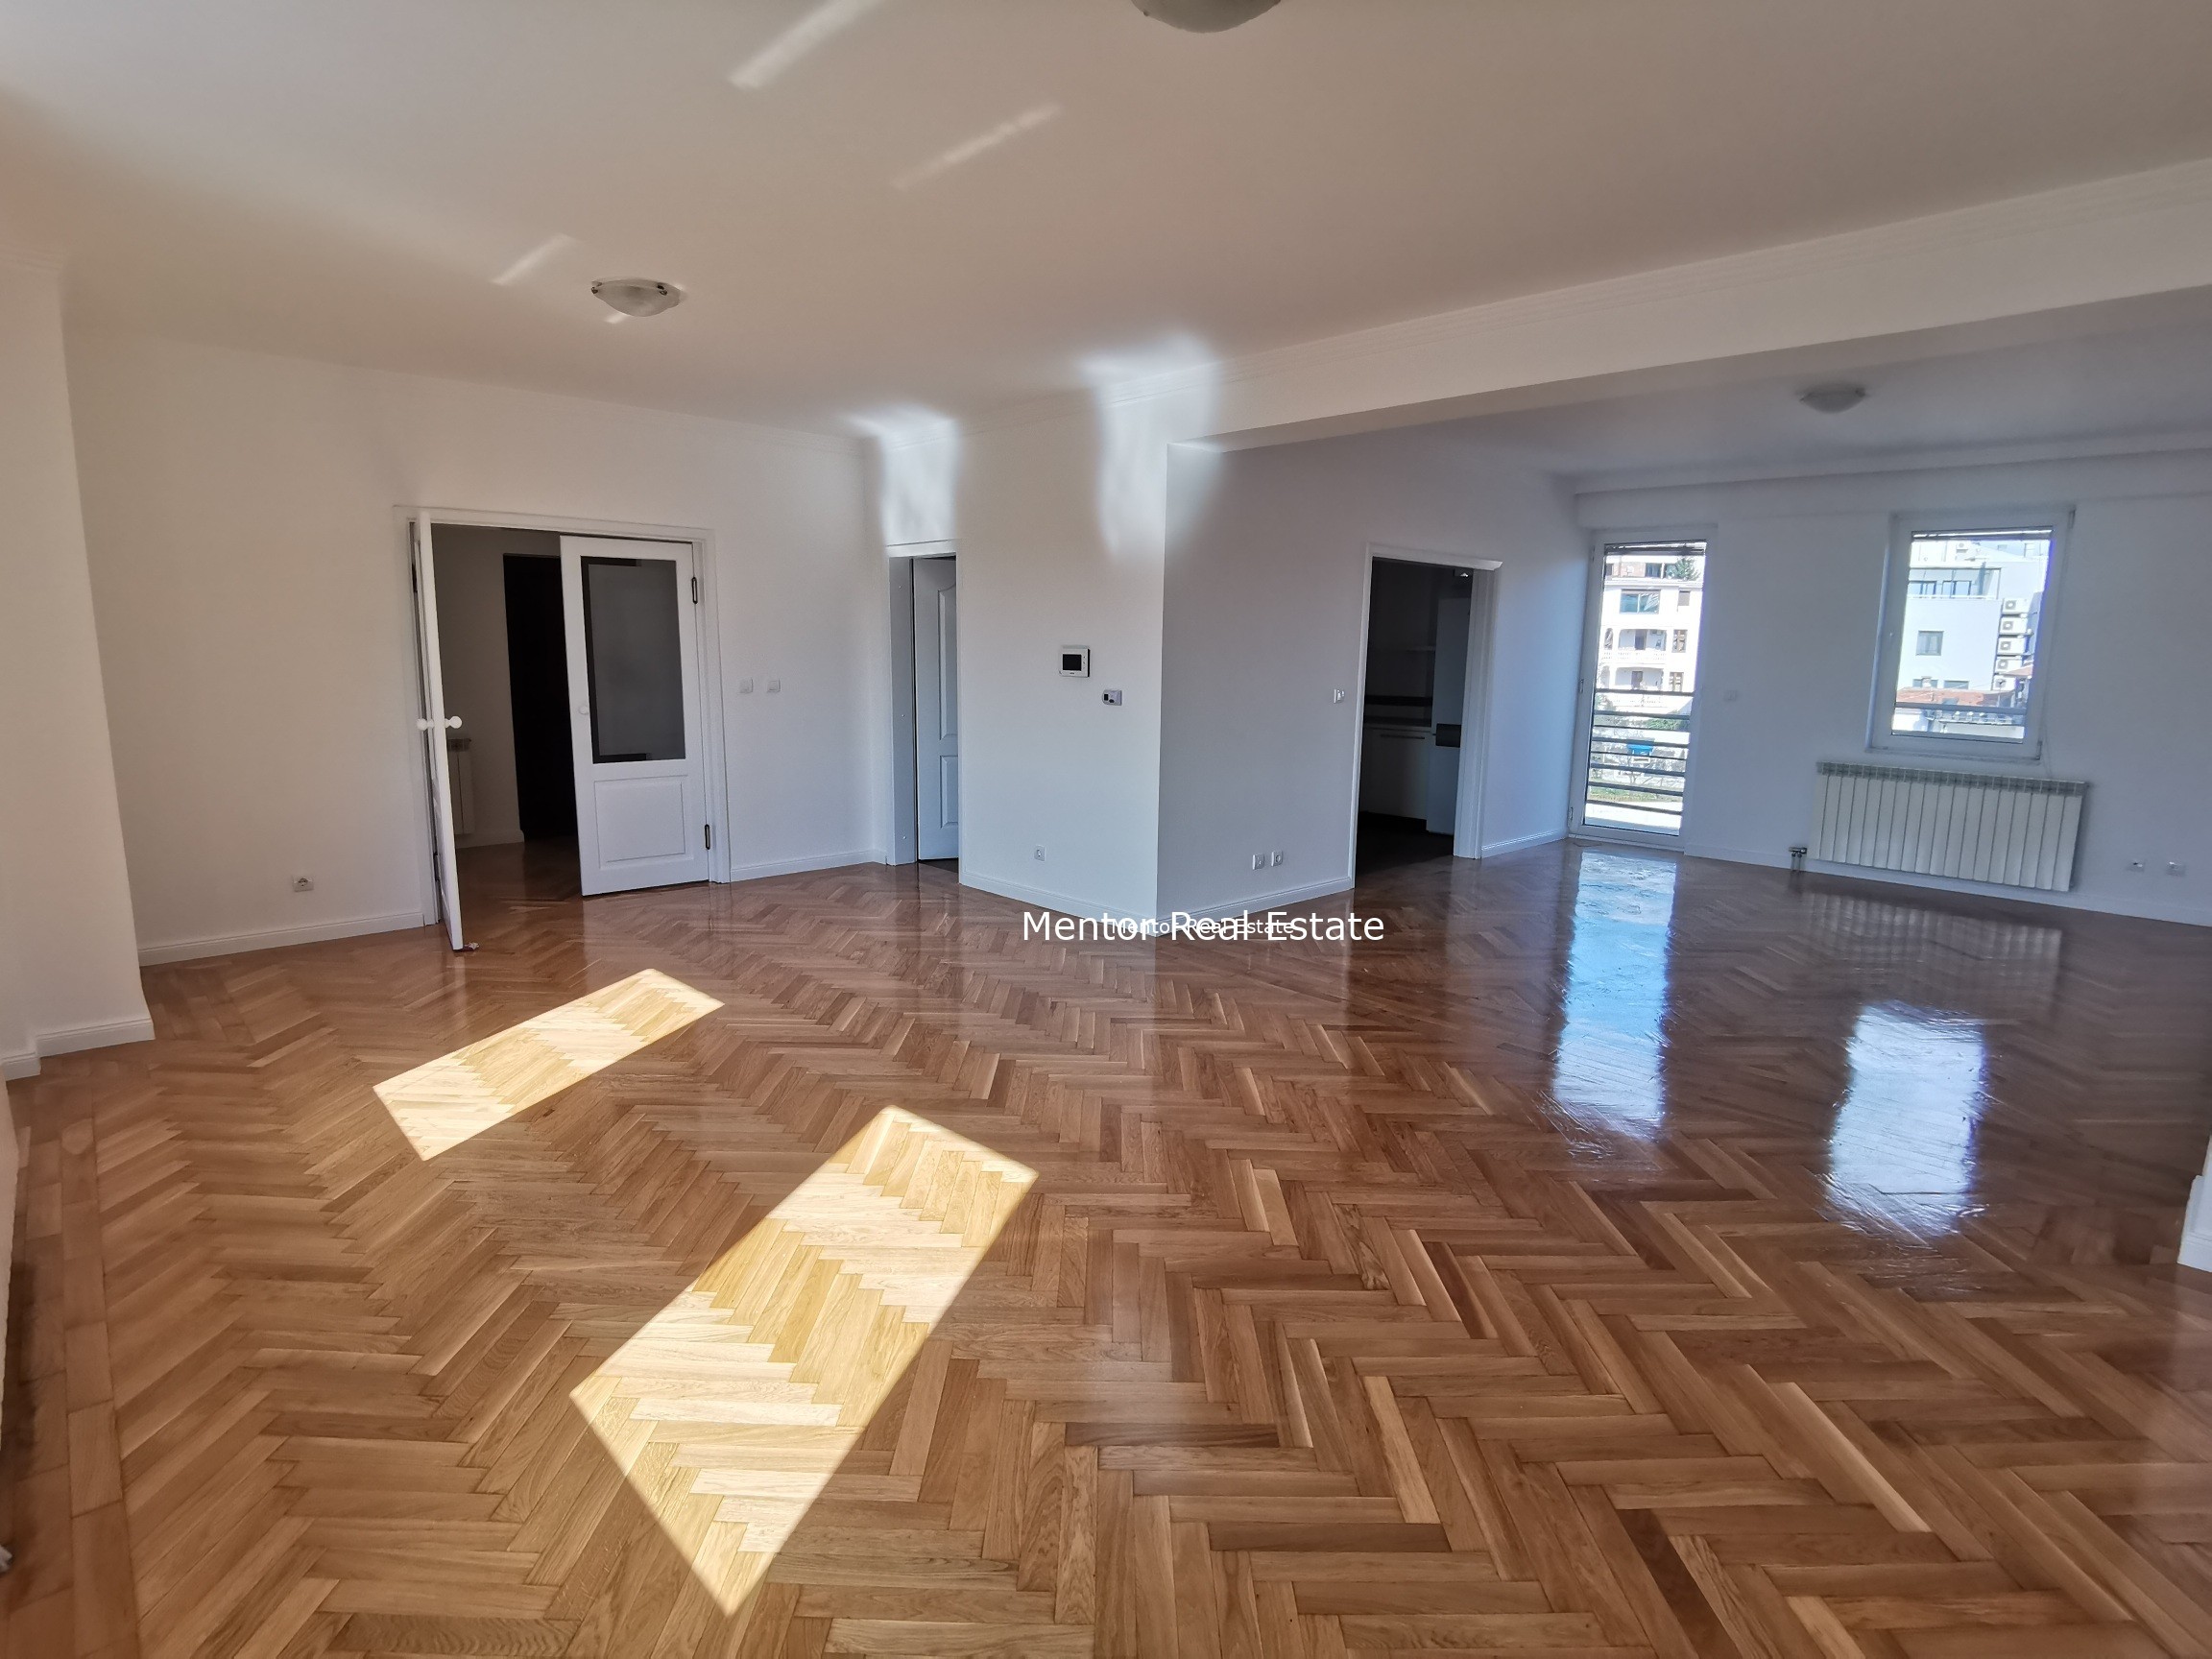 Vračar 170sqm luxury apartment for rent